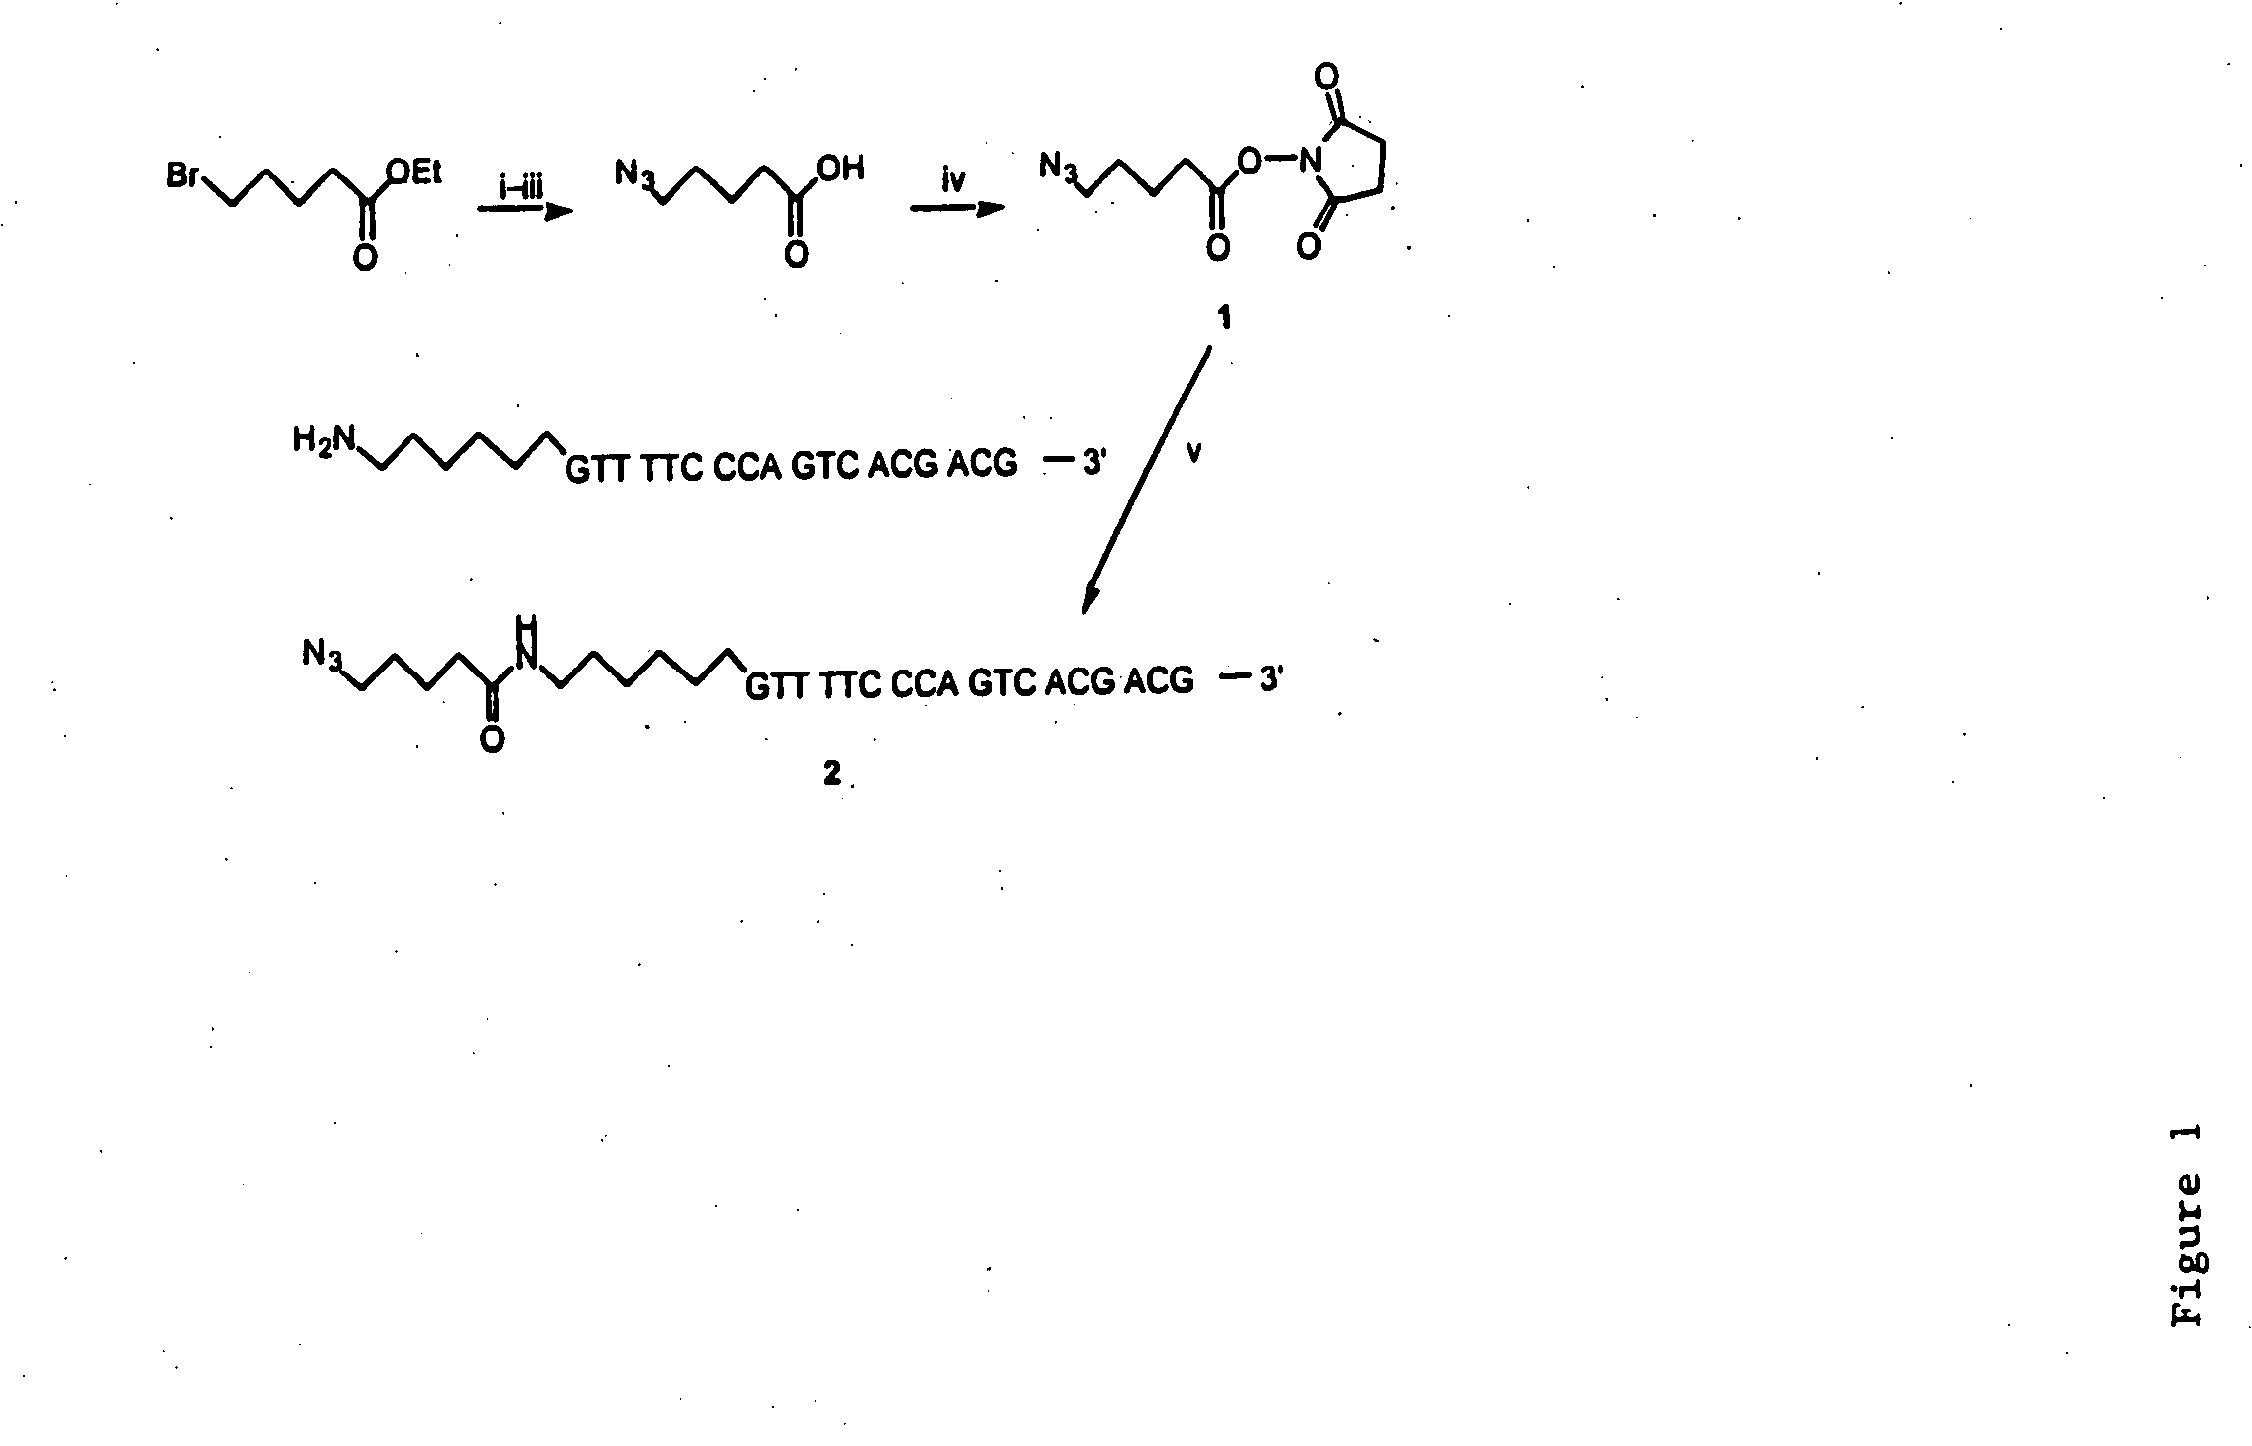 Biomolecular coupling methods using 1,3-dipolar cycloaddition chemistry